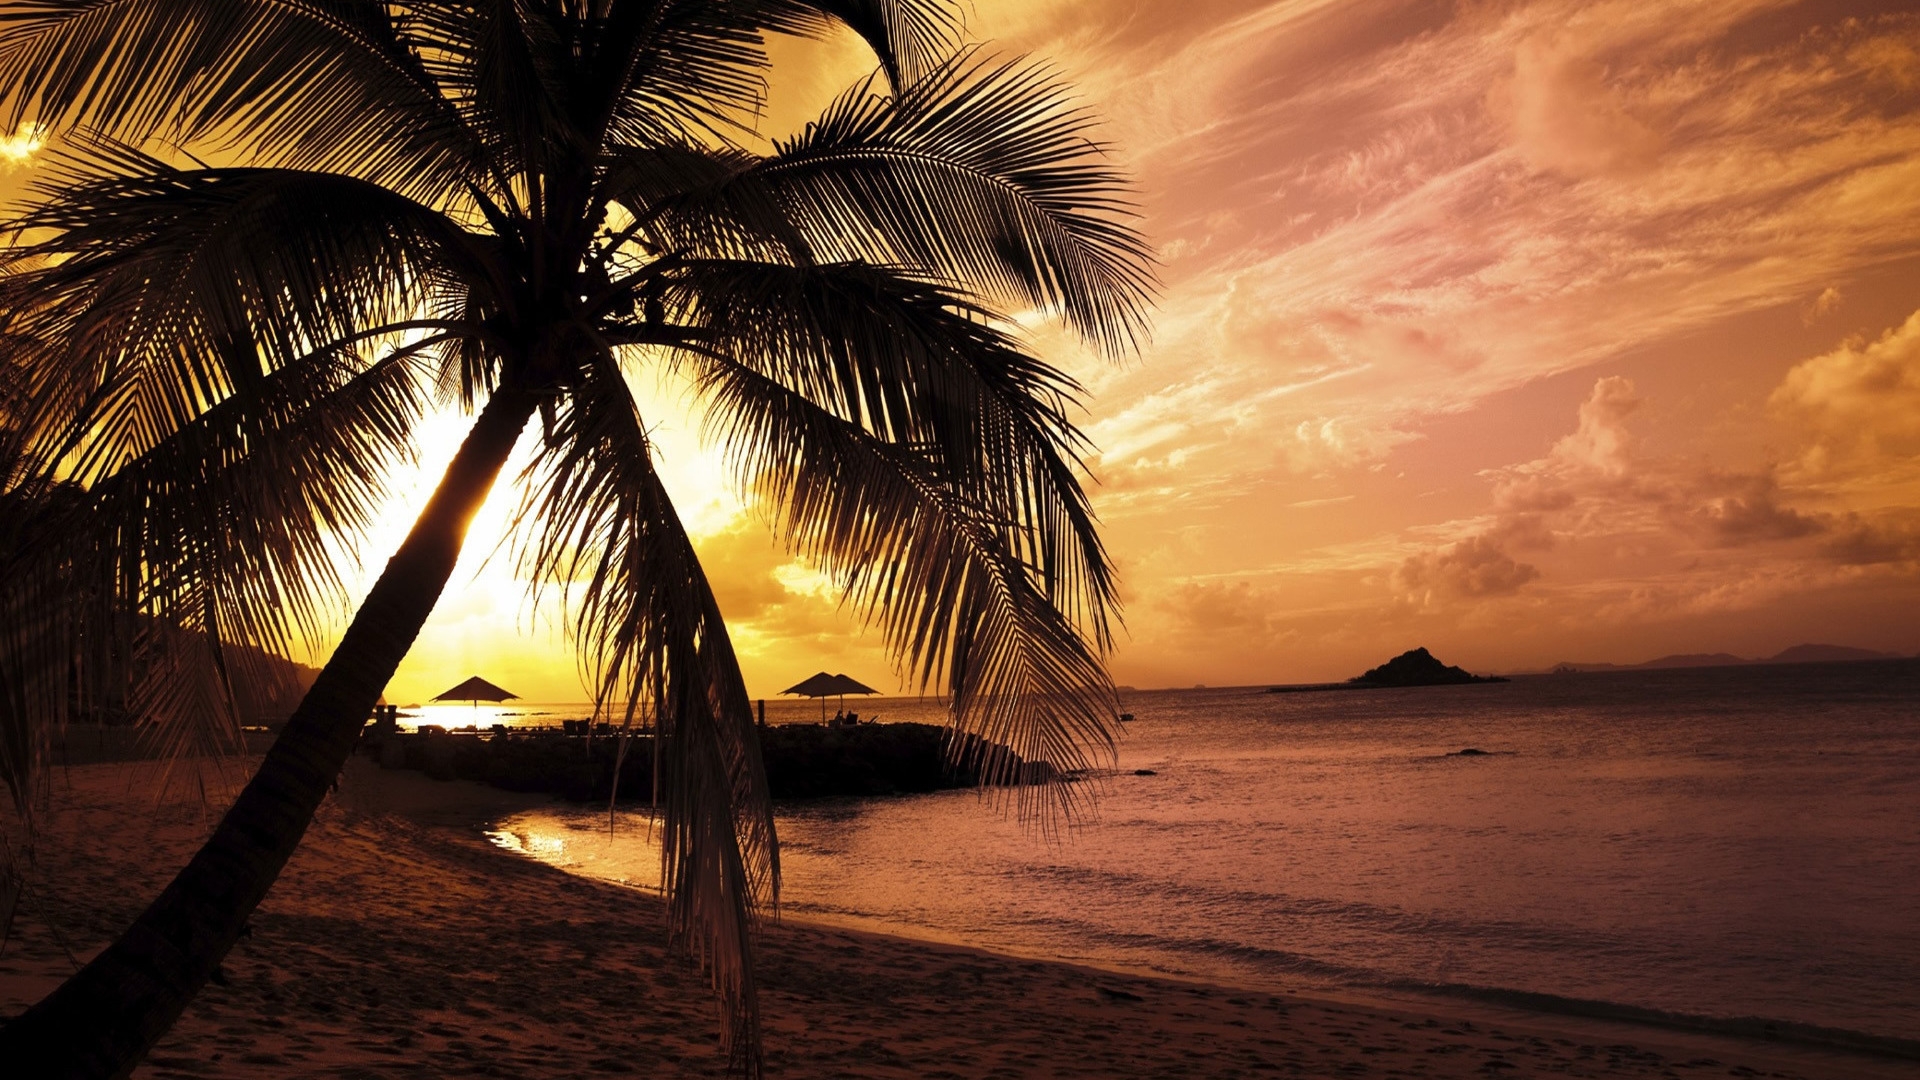 Beach Sunset for 1920 x 1080 HDTV 1080p resolution